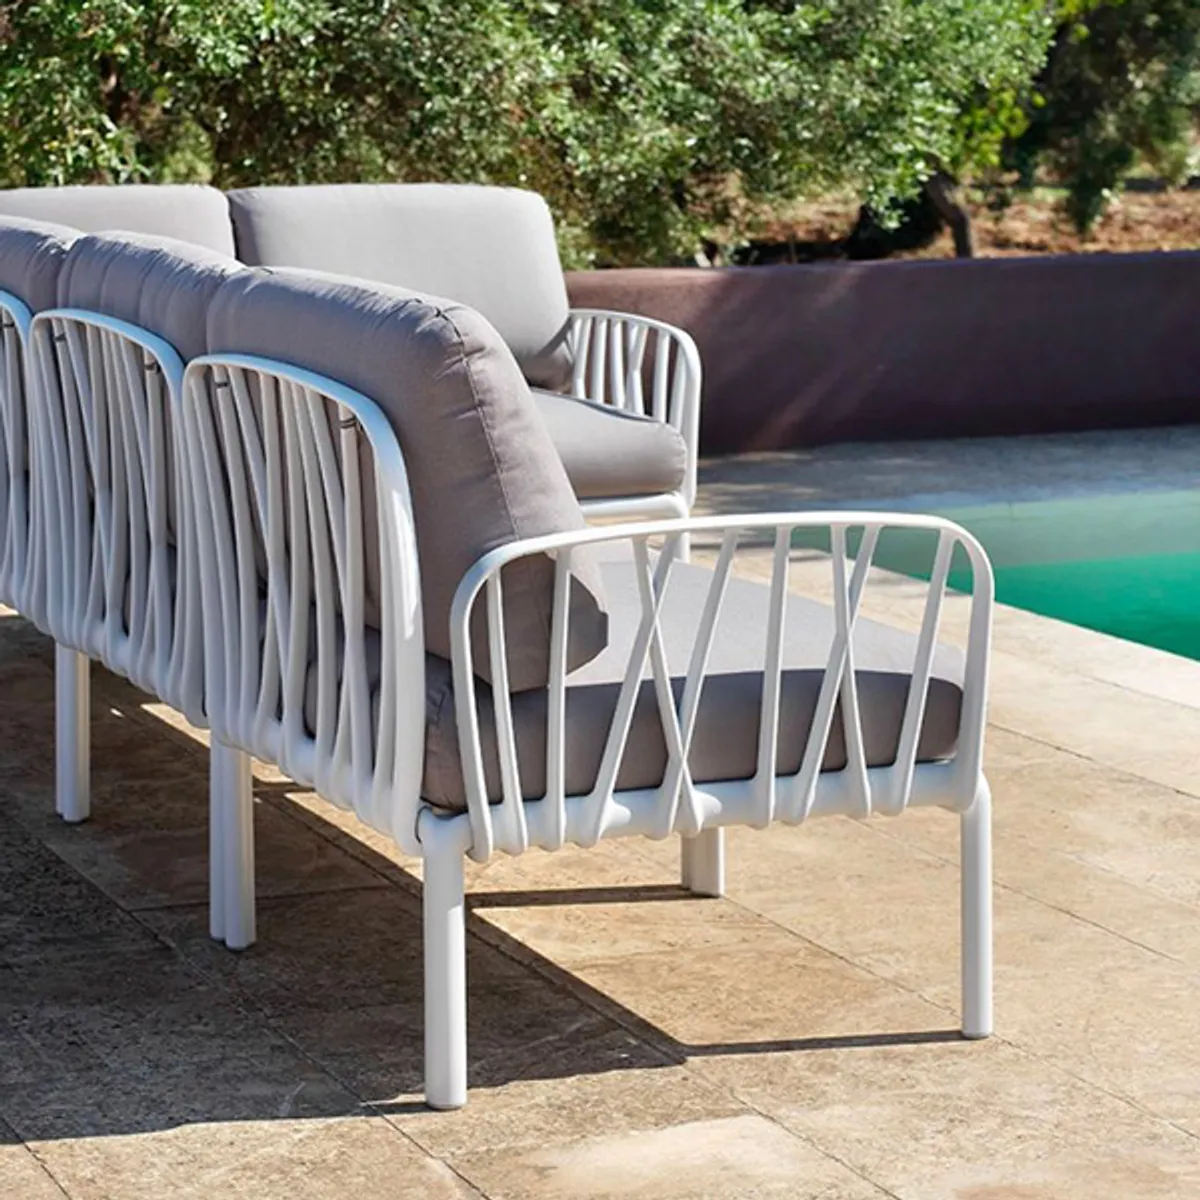 Komodo Modular Sofa Outdoor Furniture By Insideoutcontracts